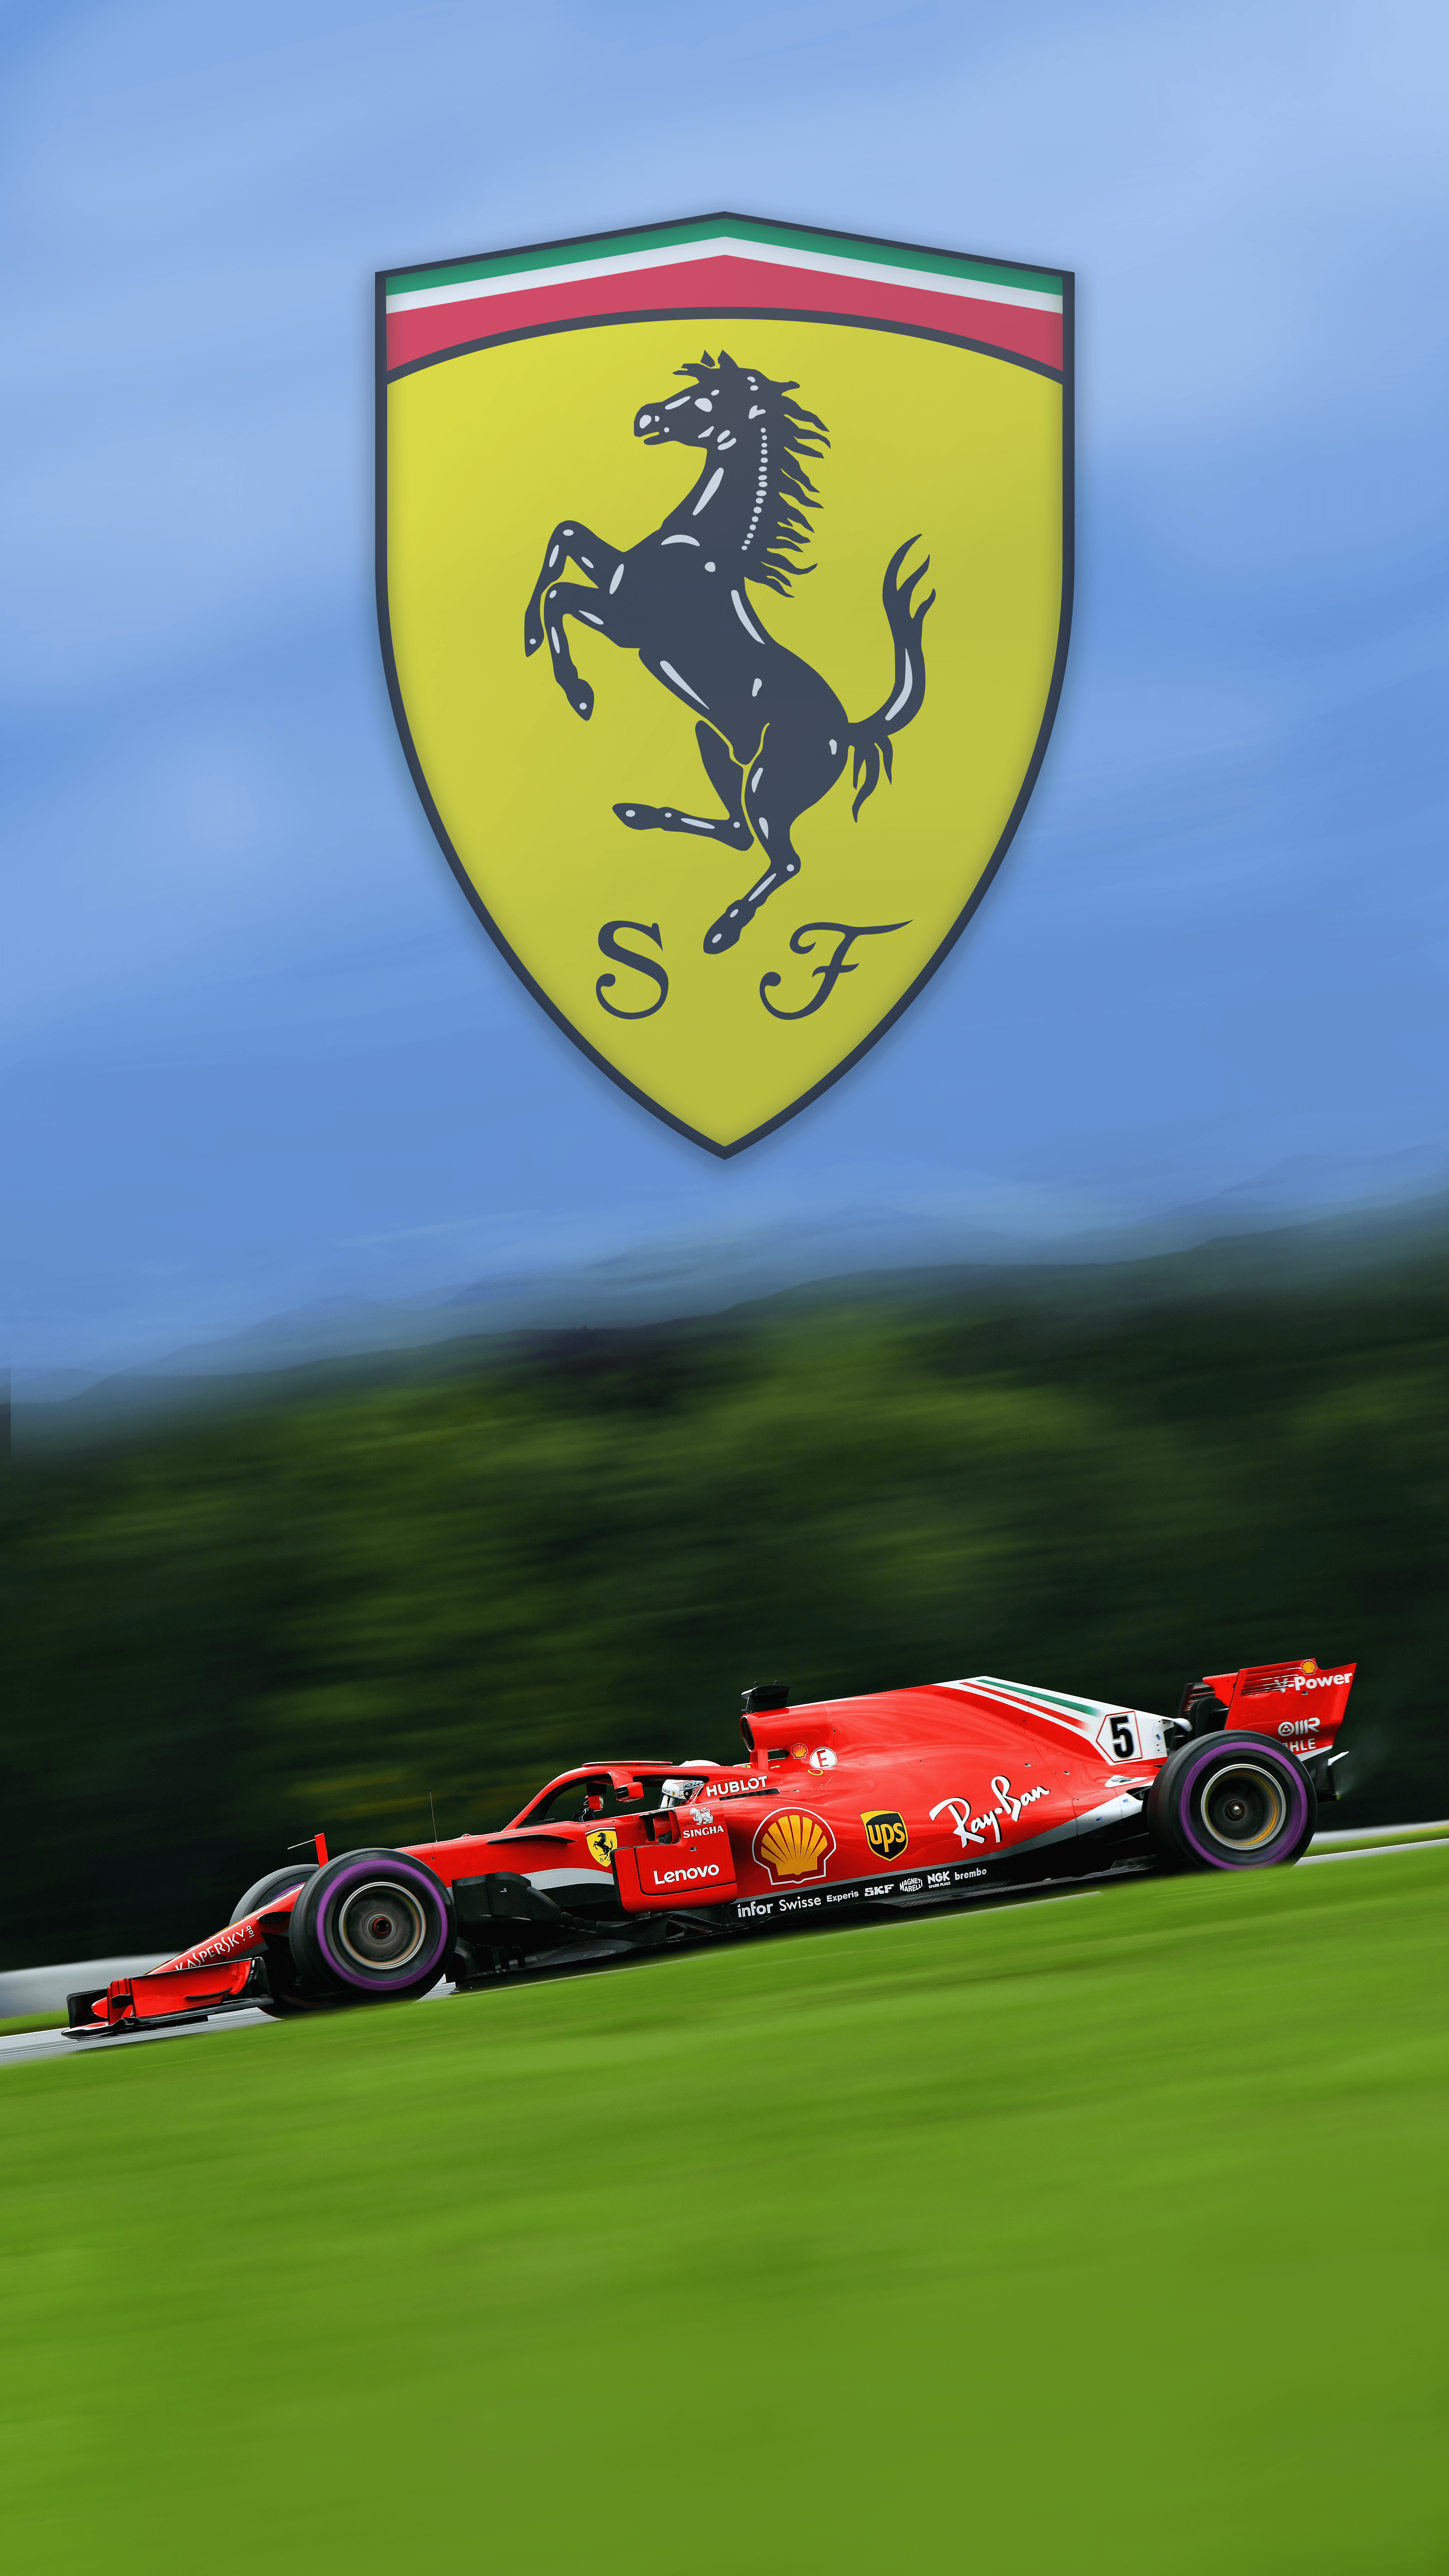 Scuderia Ferrari Vettel mobile wallpaper